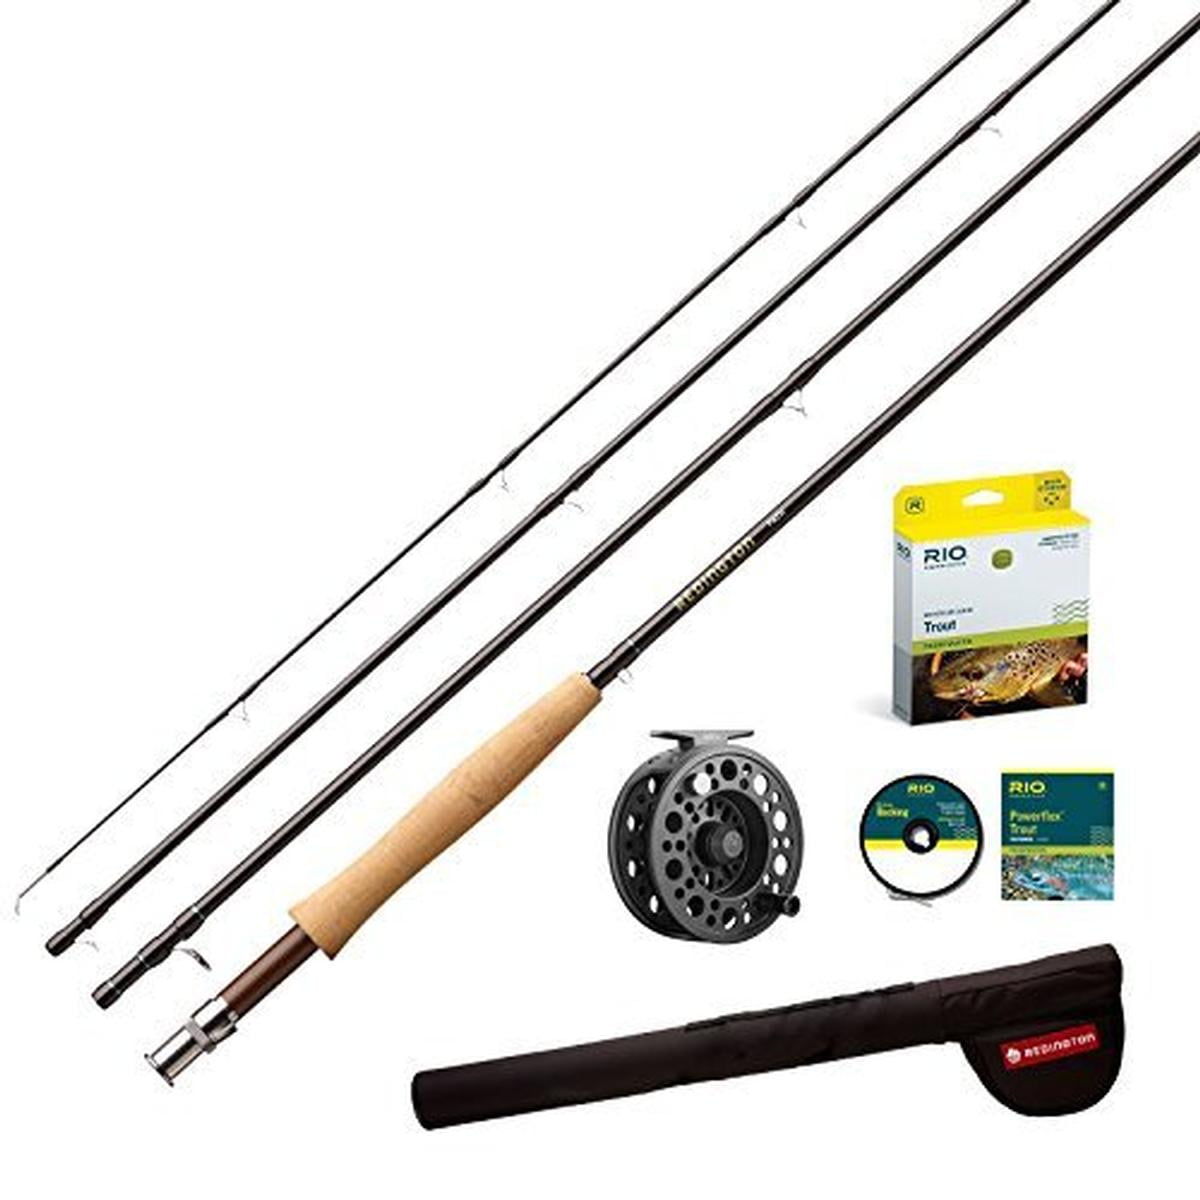 Redington Salmon Field Kit- 9' 8wt Premium fly rod and reel combo kit